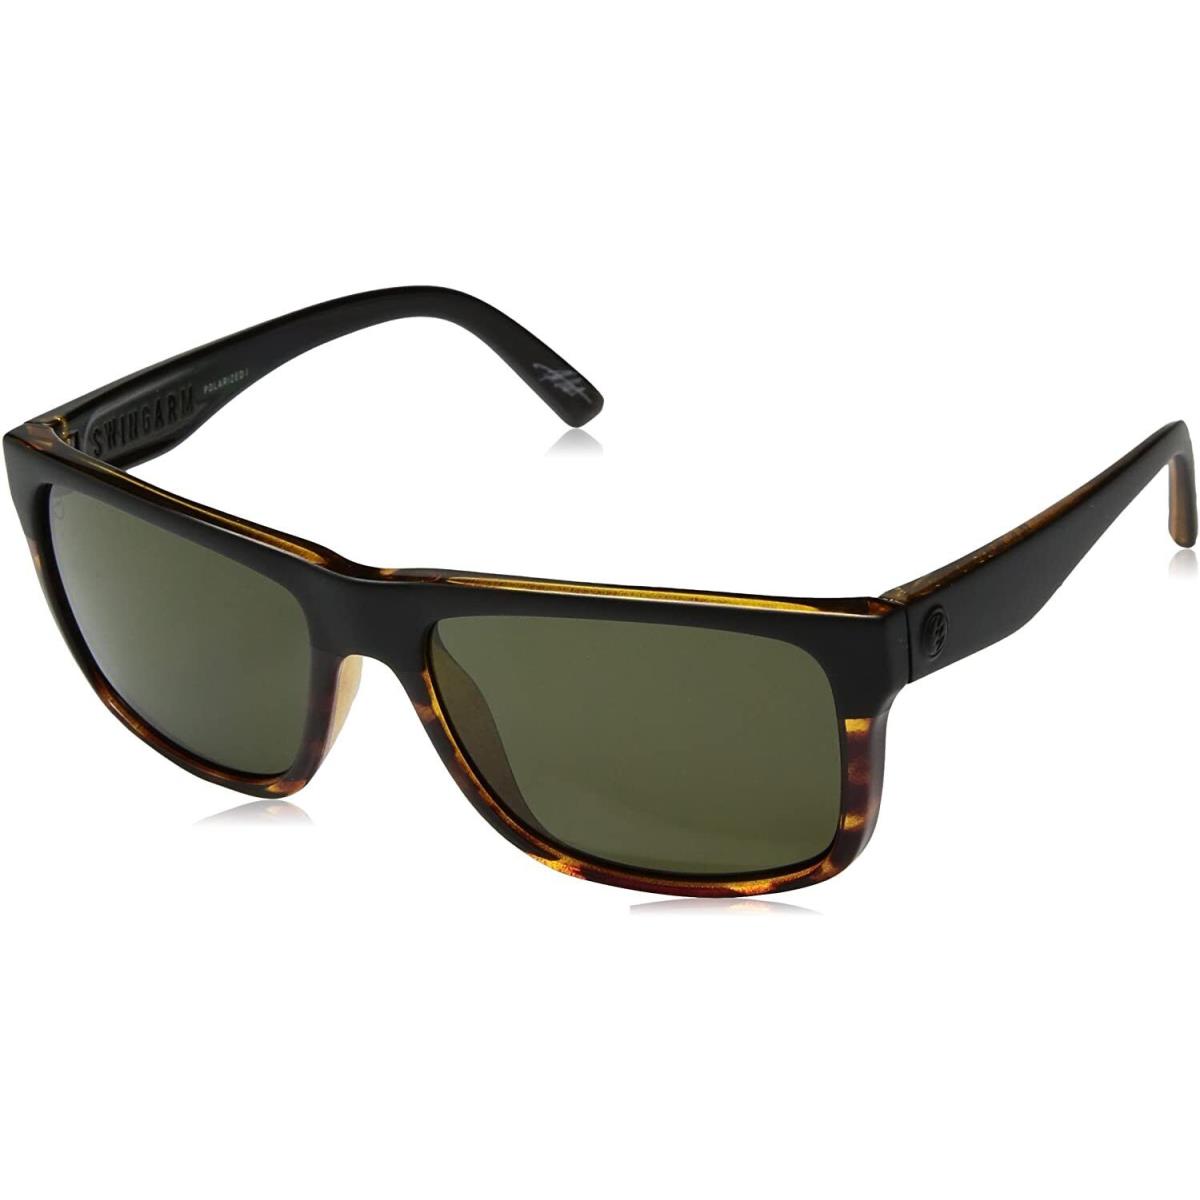 Electric Swingarm Sunglasses Darkside Black Tortoise with Grey Polarized Lens